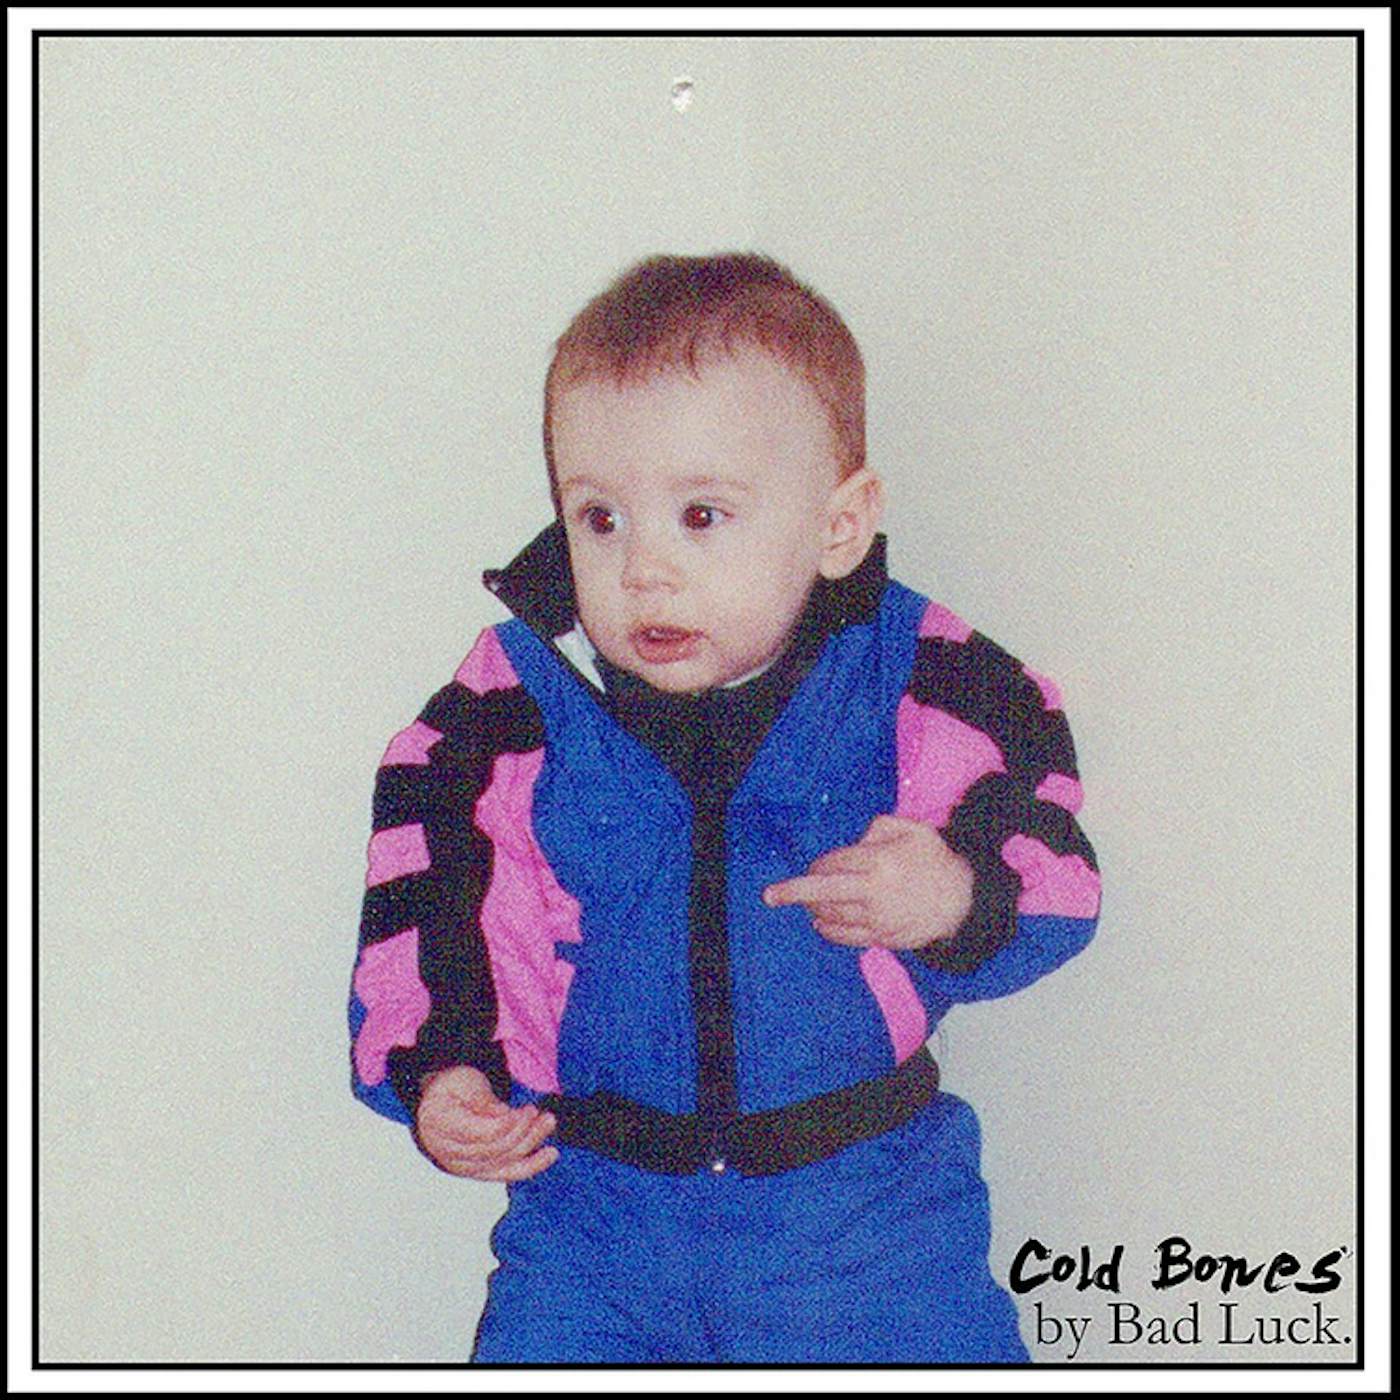 Bad Luck COLD BONES CD